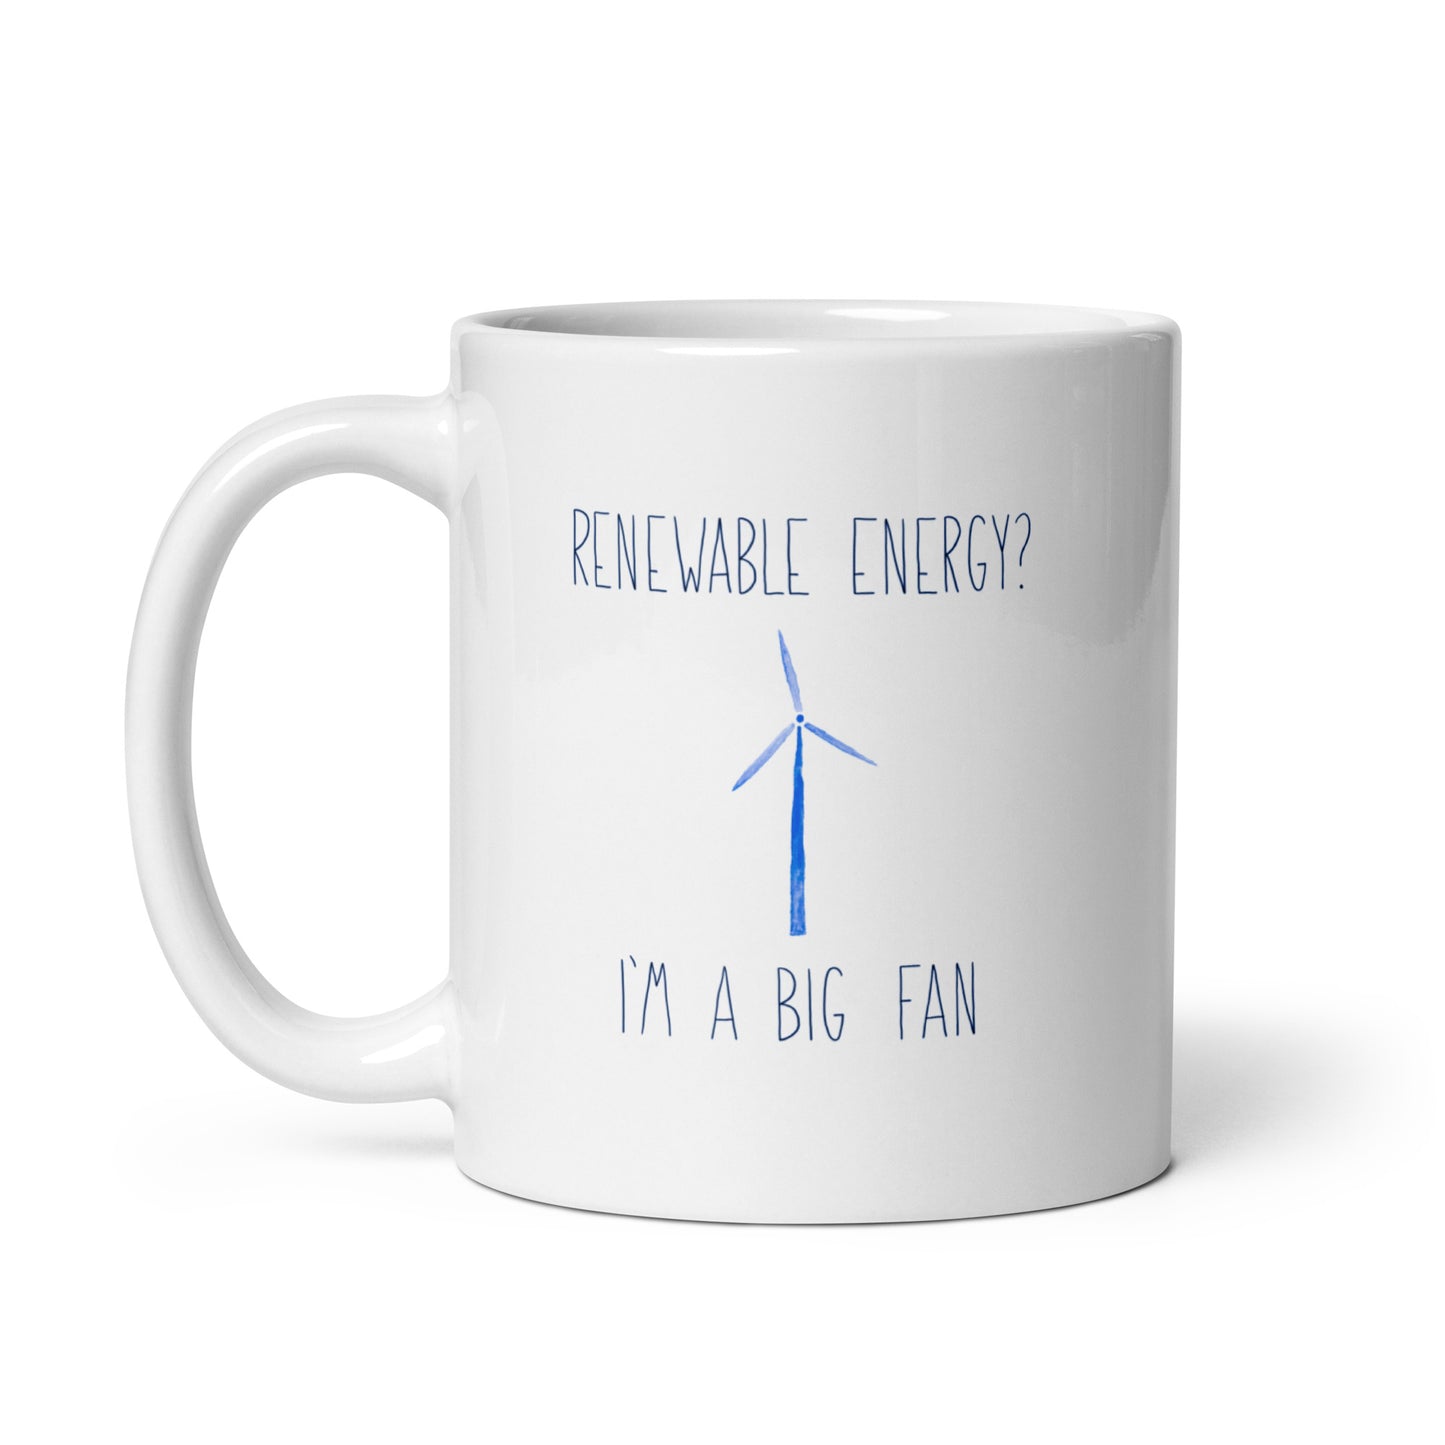 Renewable Energy? I'm a big fan mug